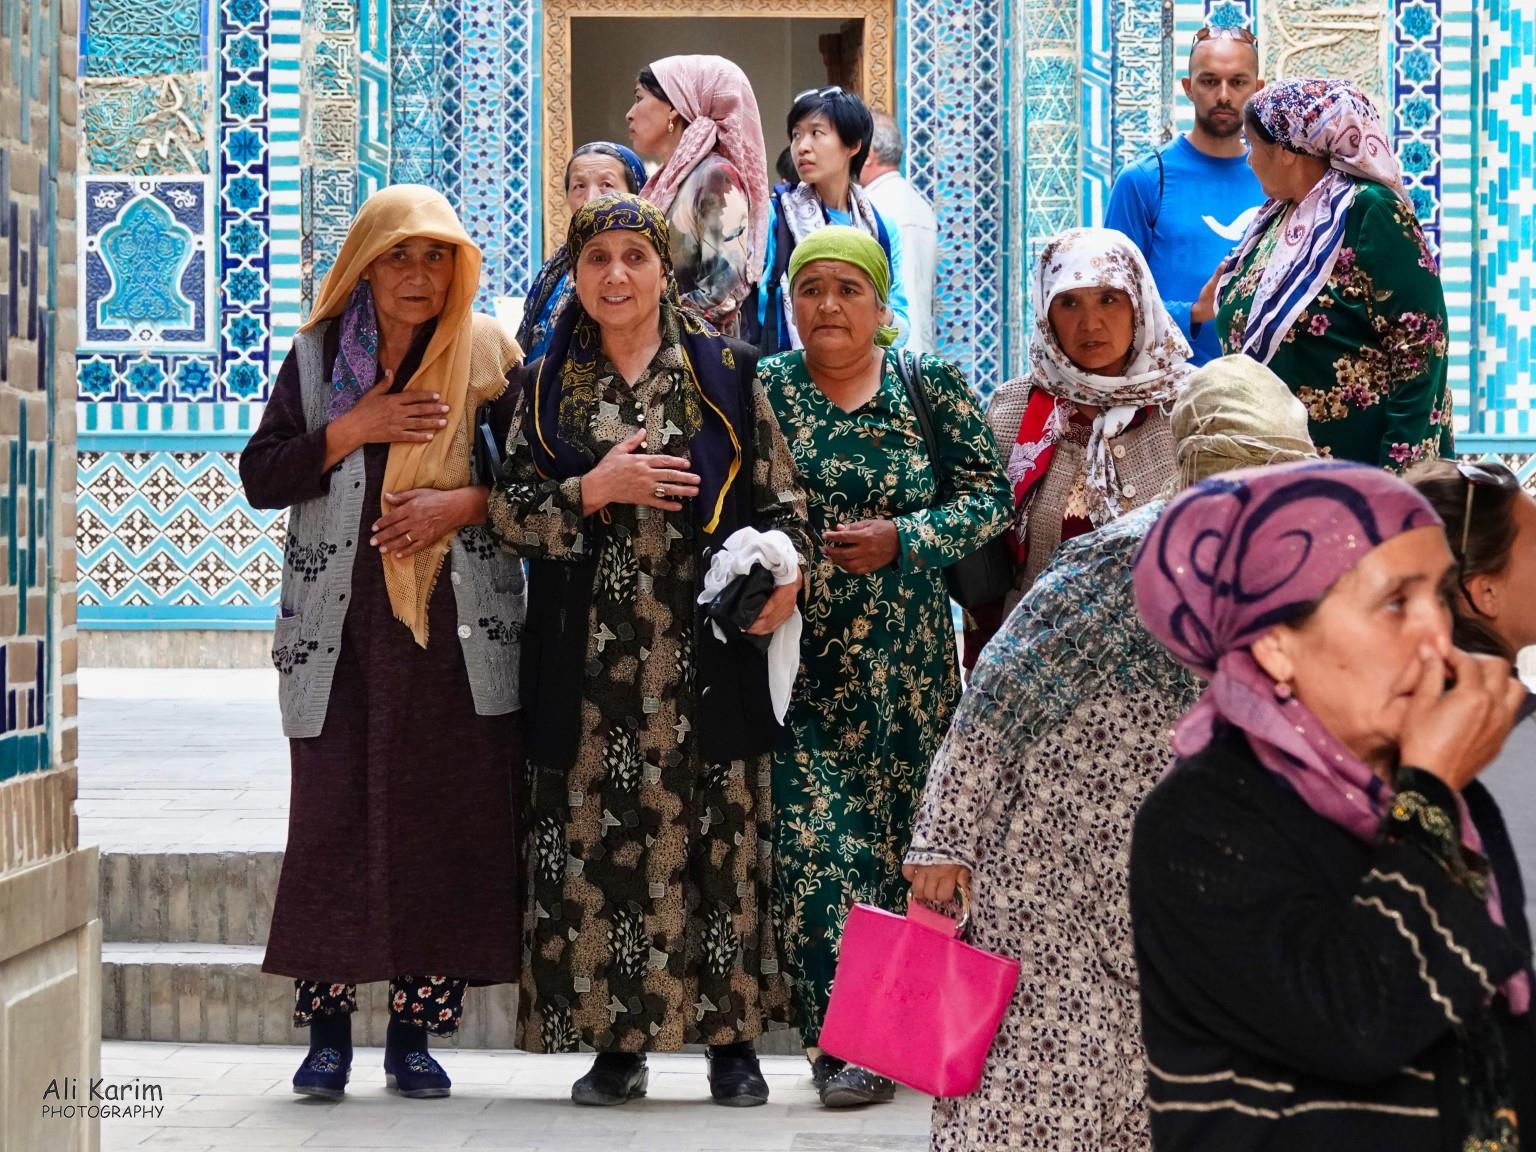 More Samarkand, Locals enjoying and exploring the Shah-i-zinda